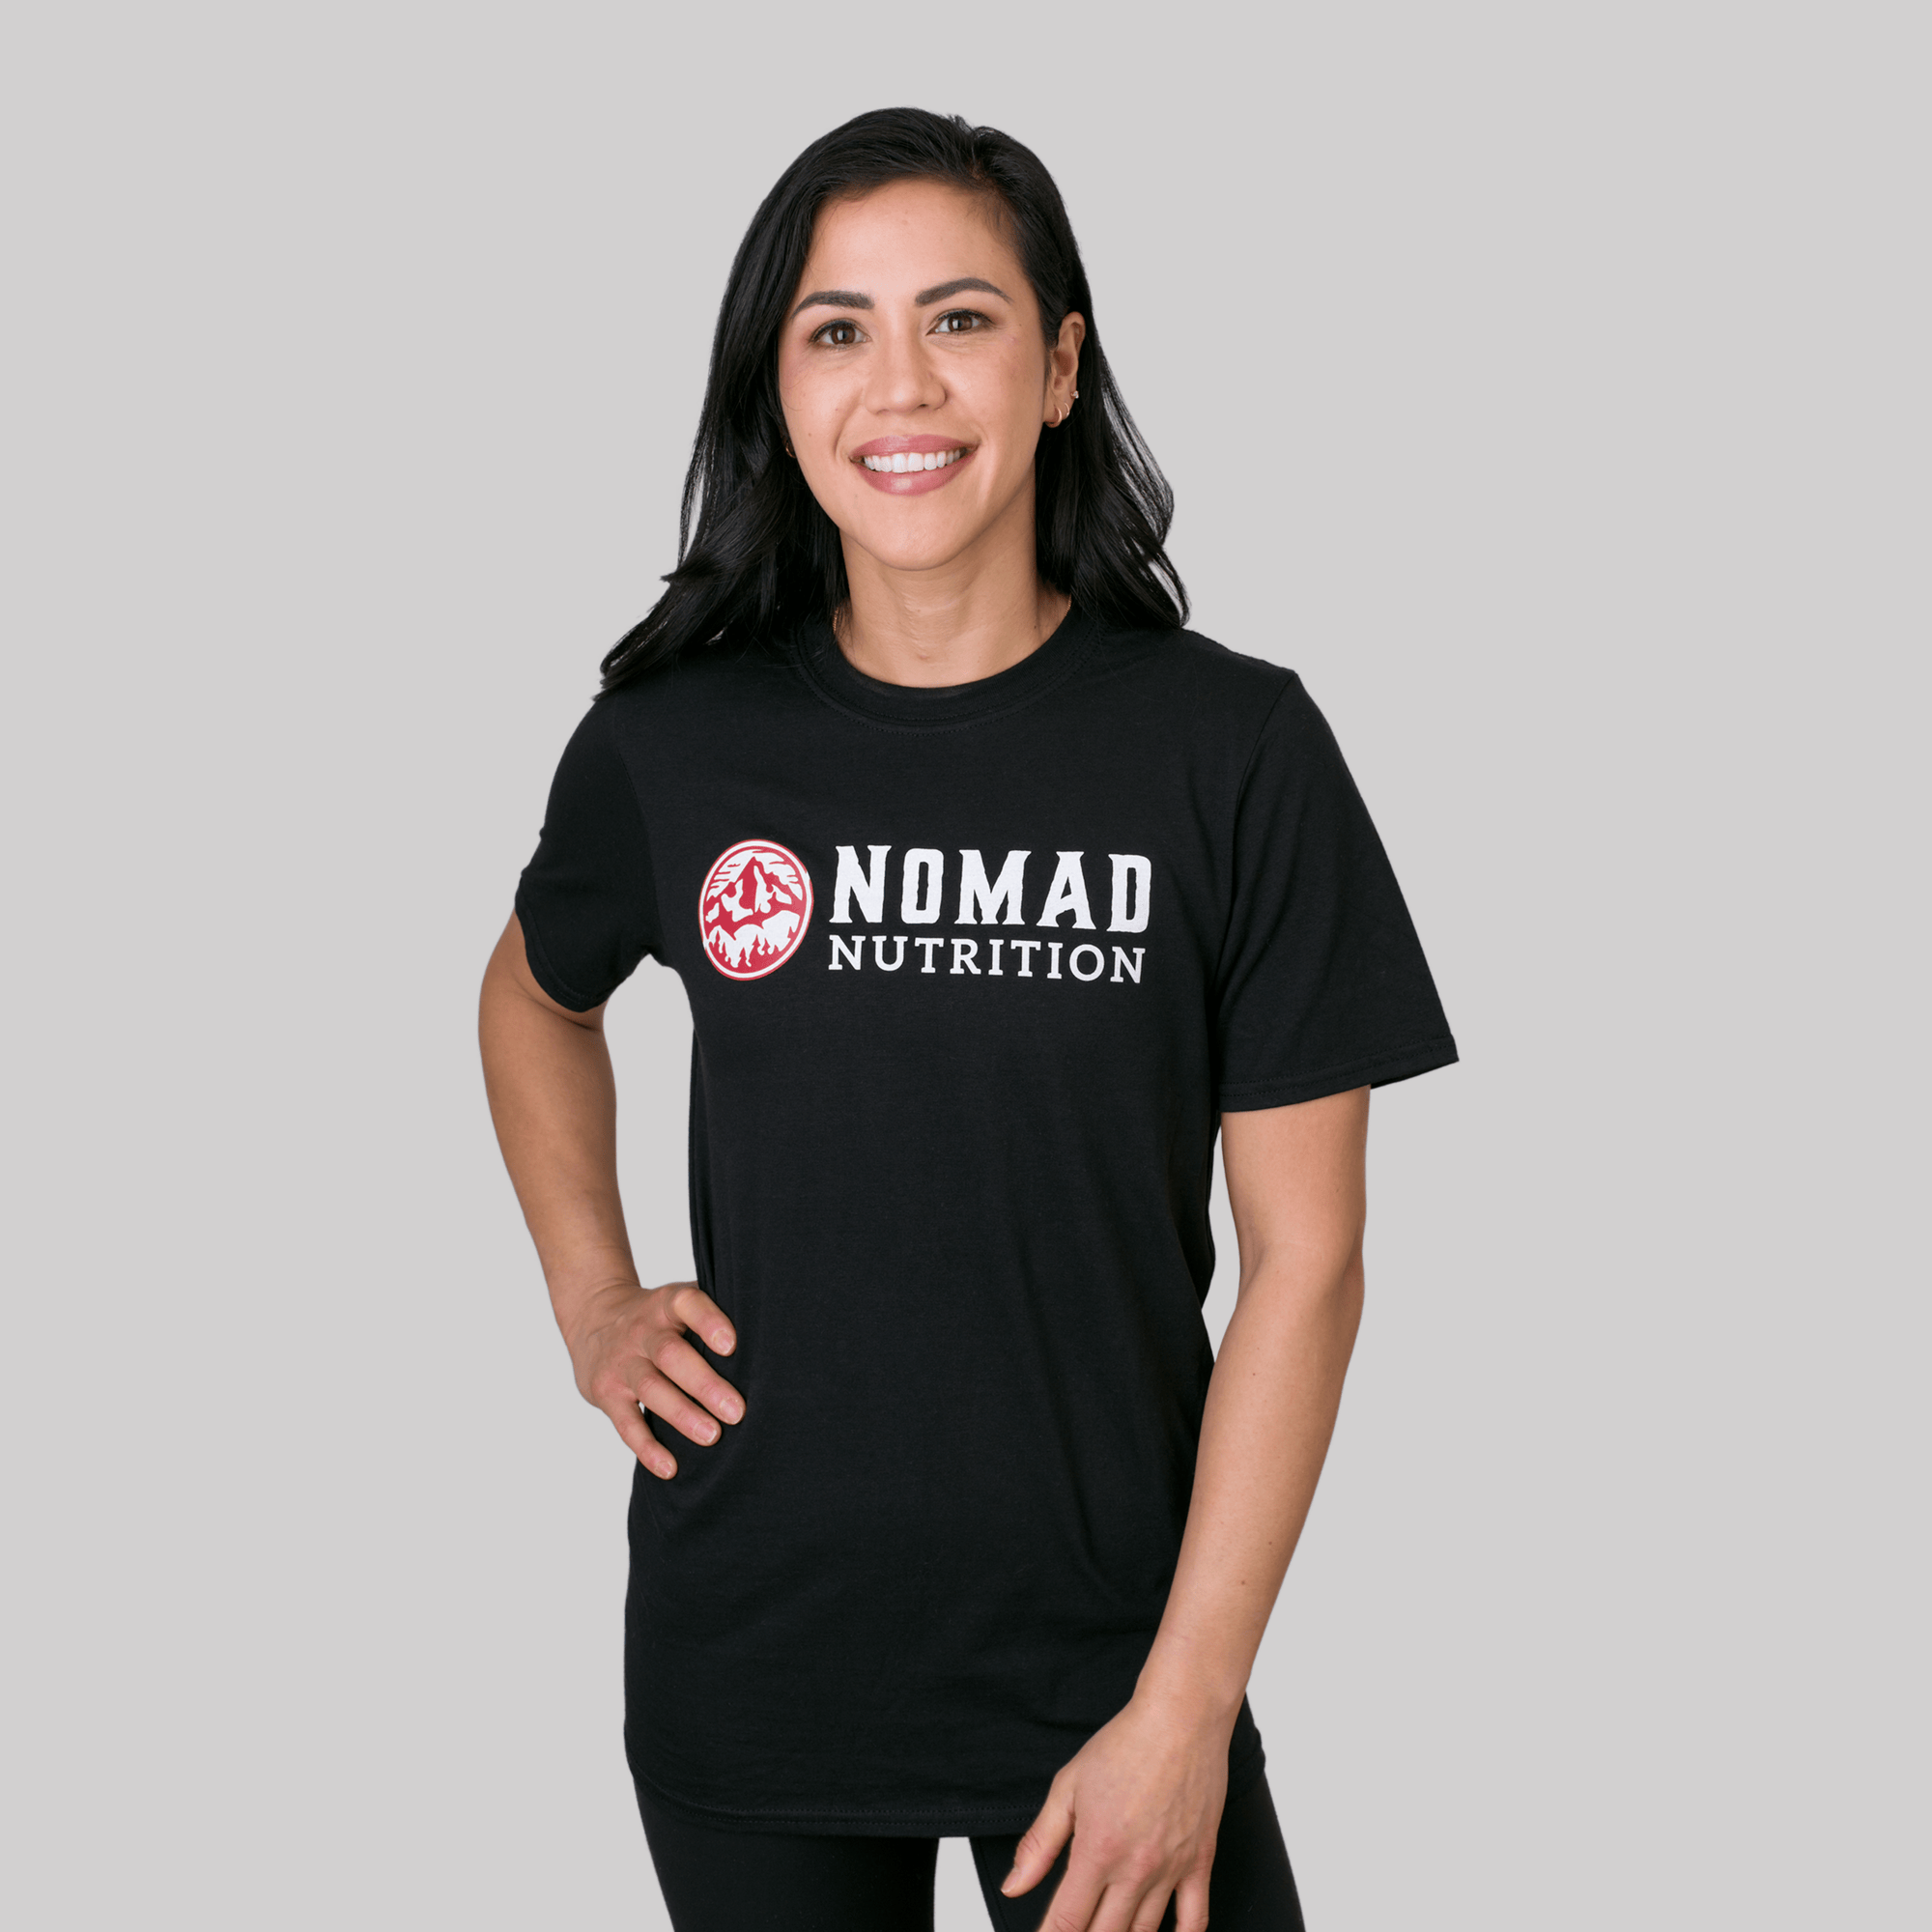 Nomad Nutrition Shadow T-shirt female model wearing medium